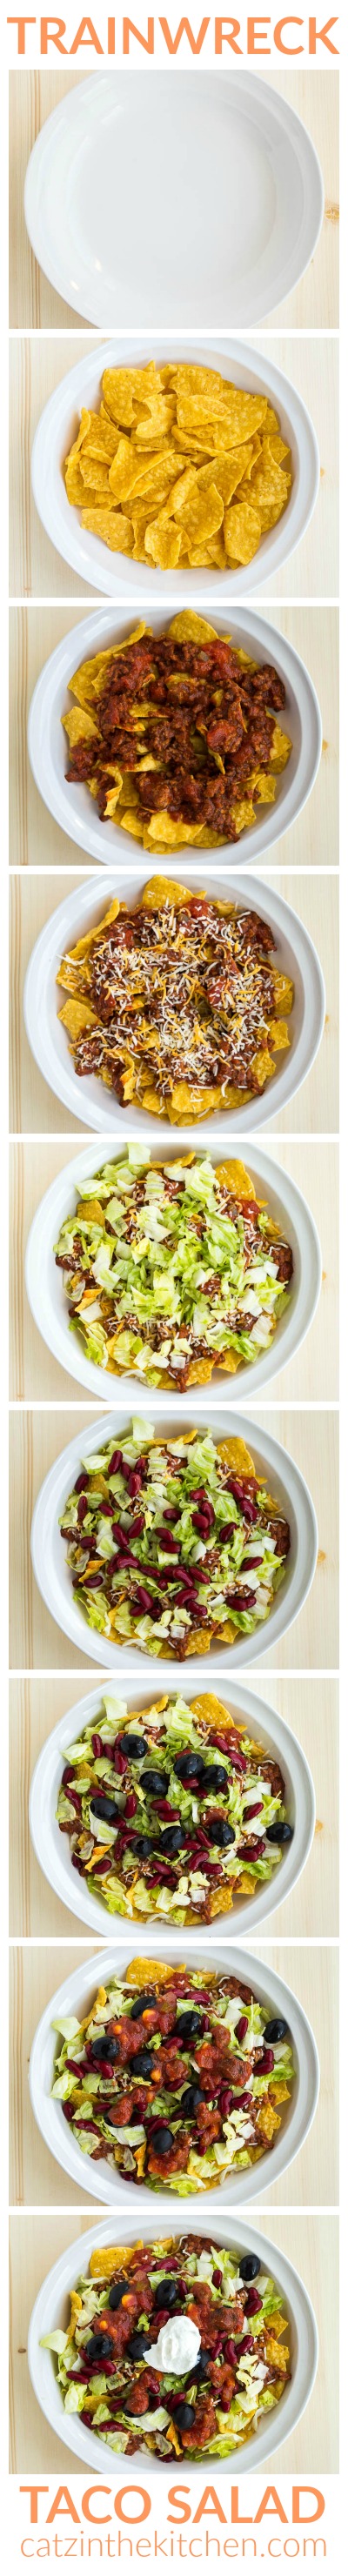 Trainwreck Taco Salad | Catz in the Kitchen | catzinthekitchen.com | #trainwreck #salad #taco #recipe